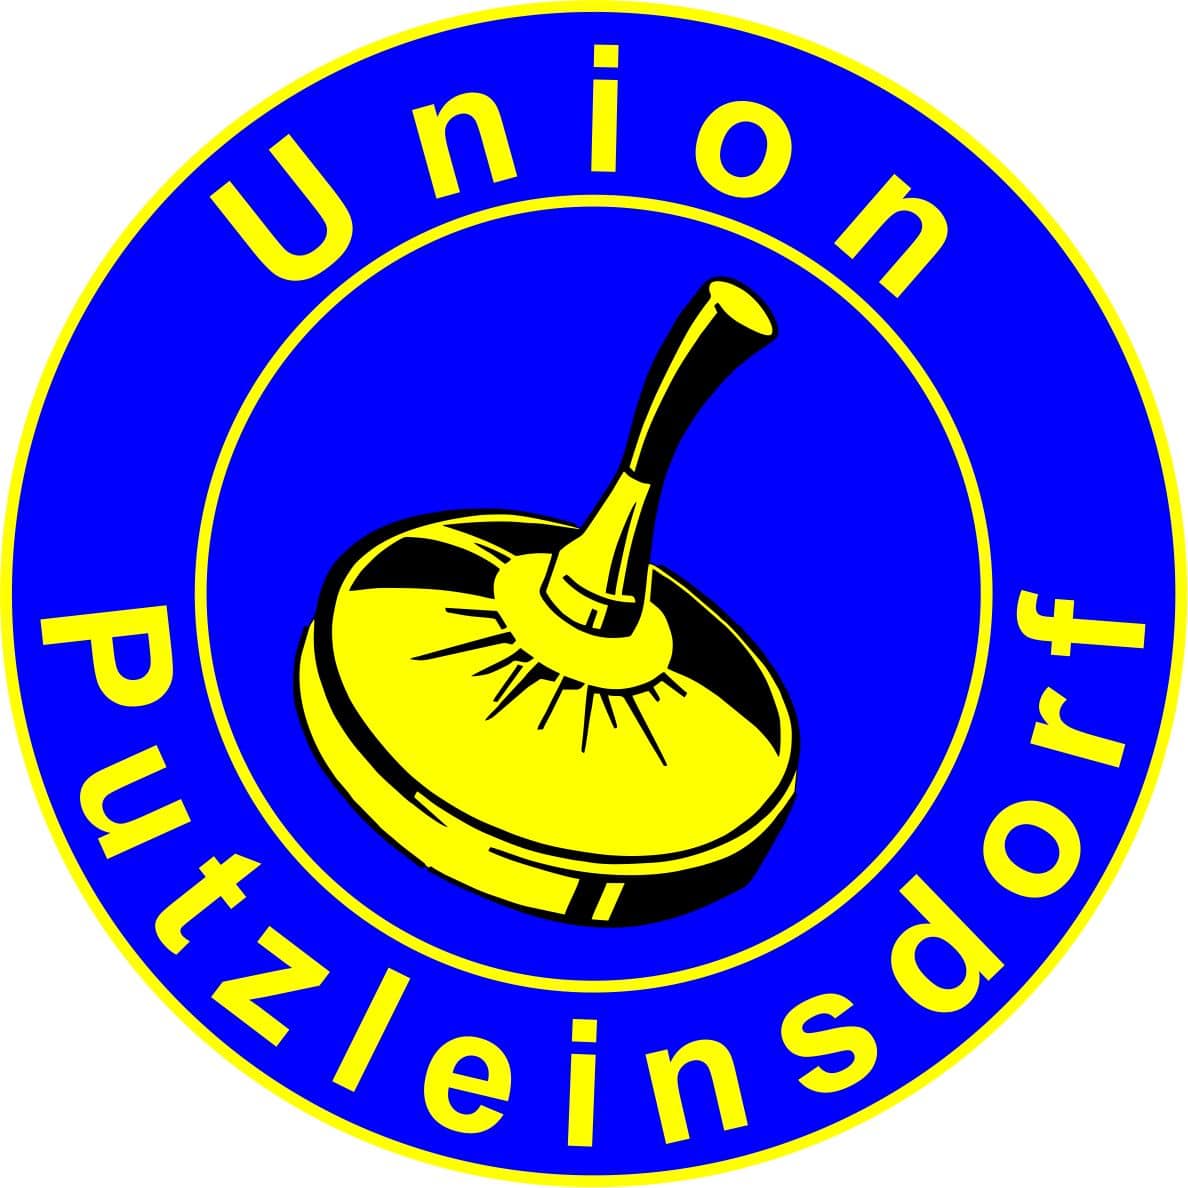 Union Stocksport Putzleinsdorf 1